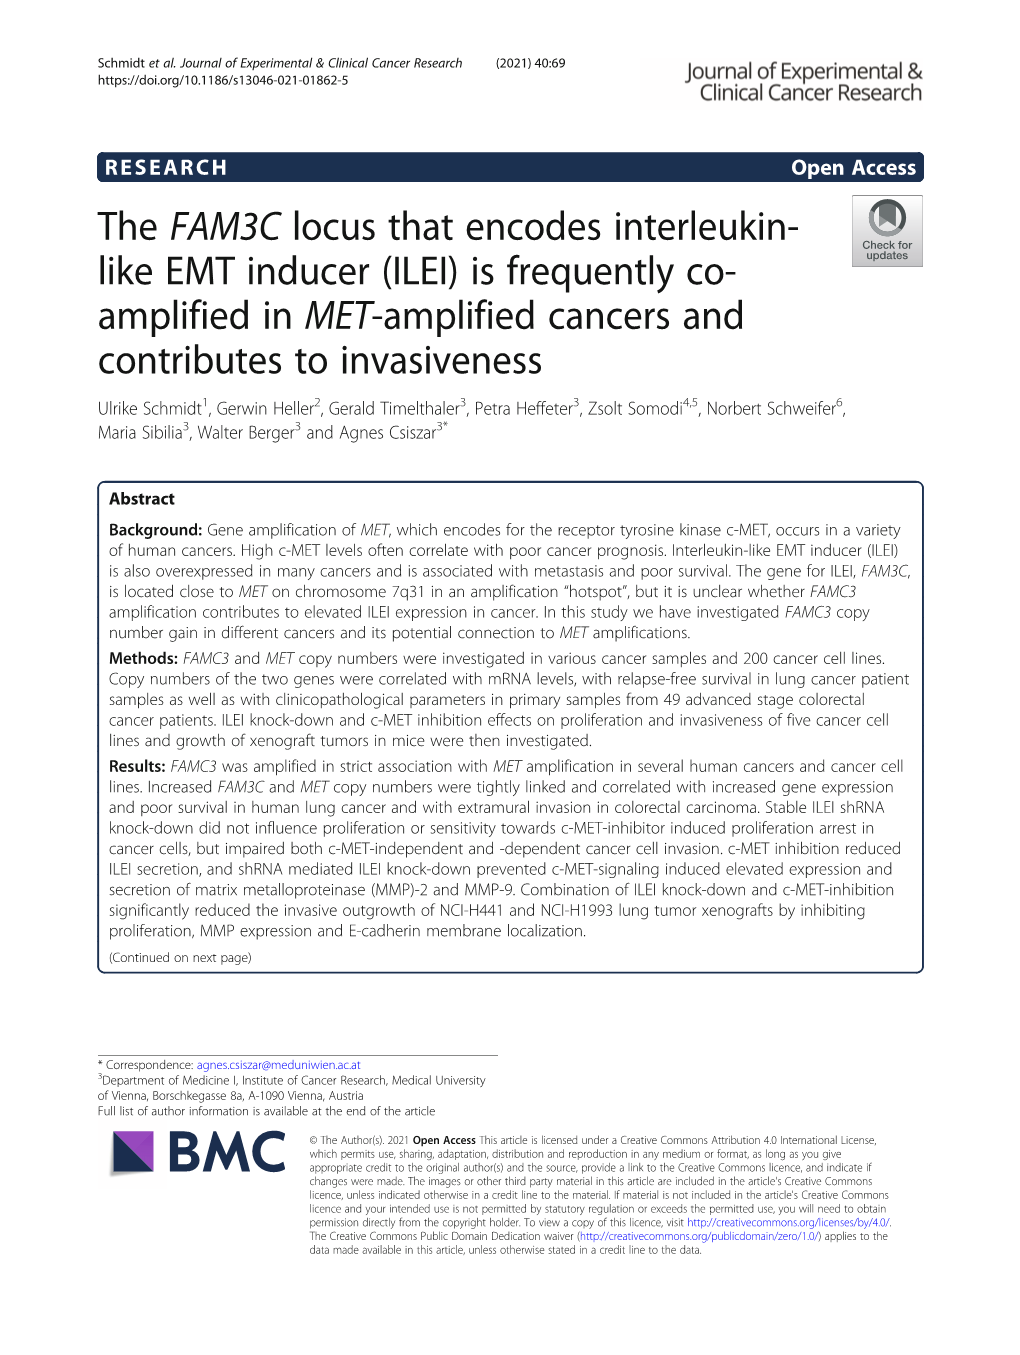 The FAM3C Locus That Encodes Interleukin-Like EMT Inducer (ILEI